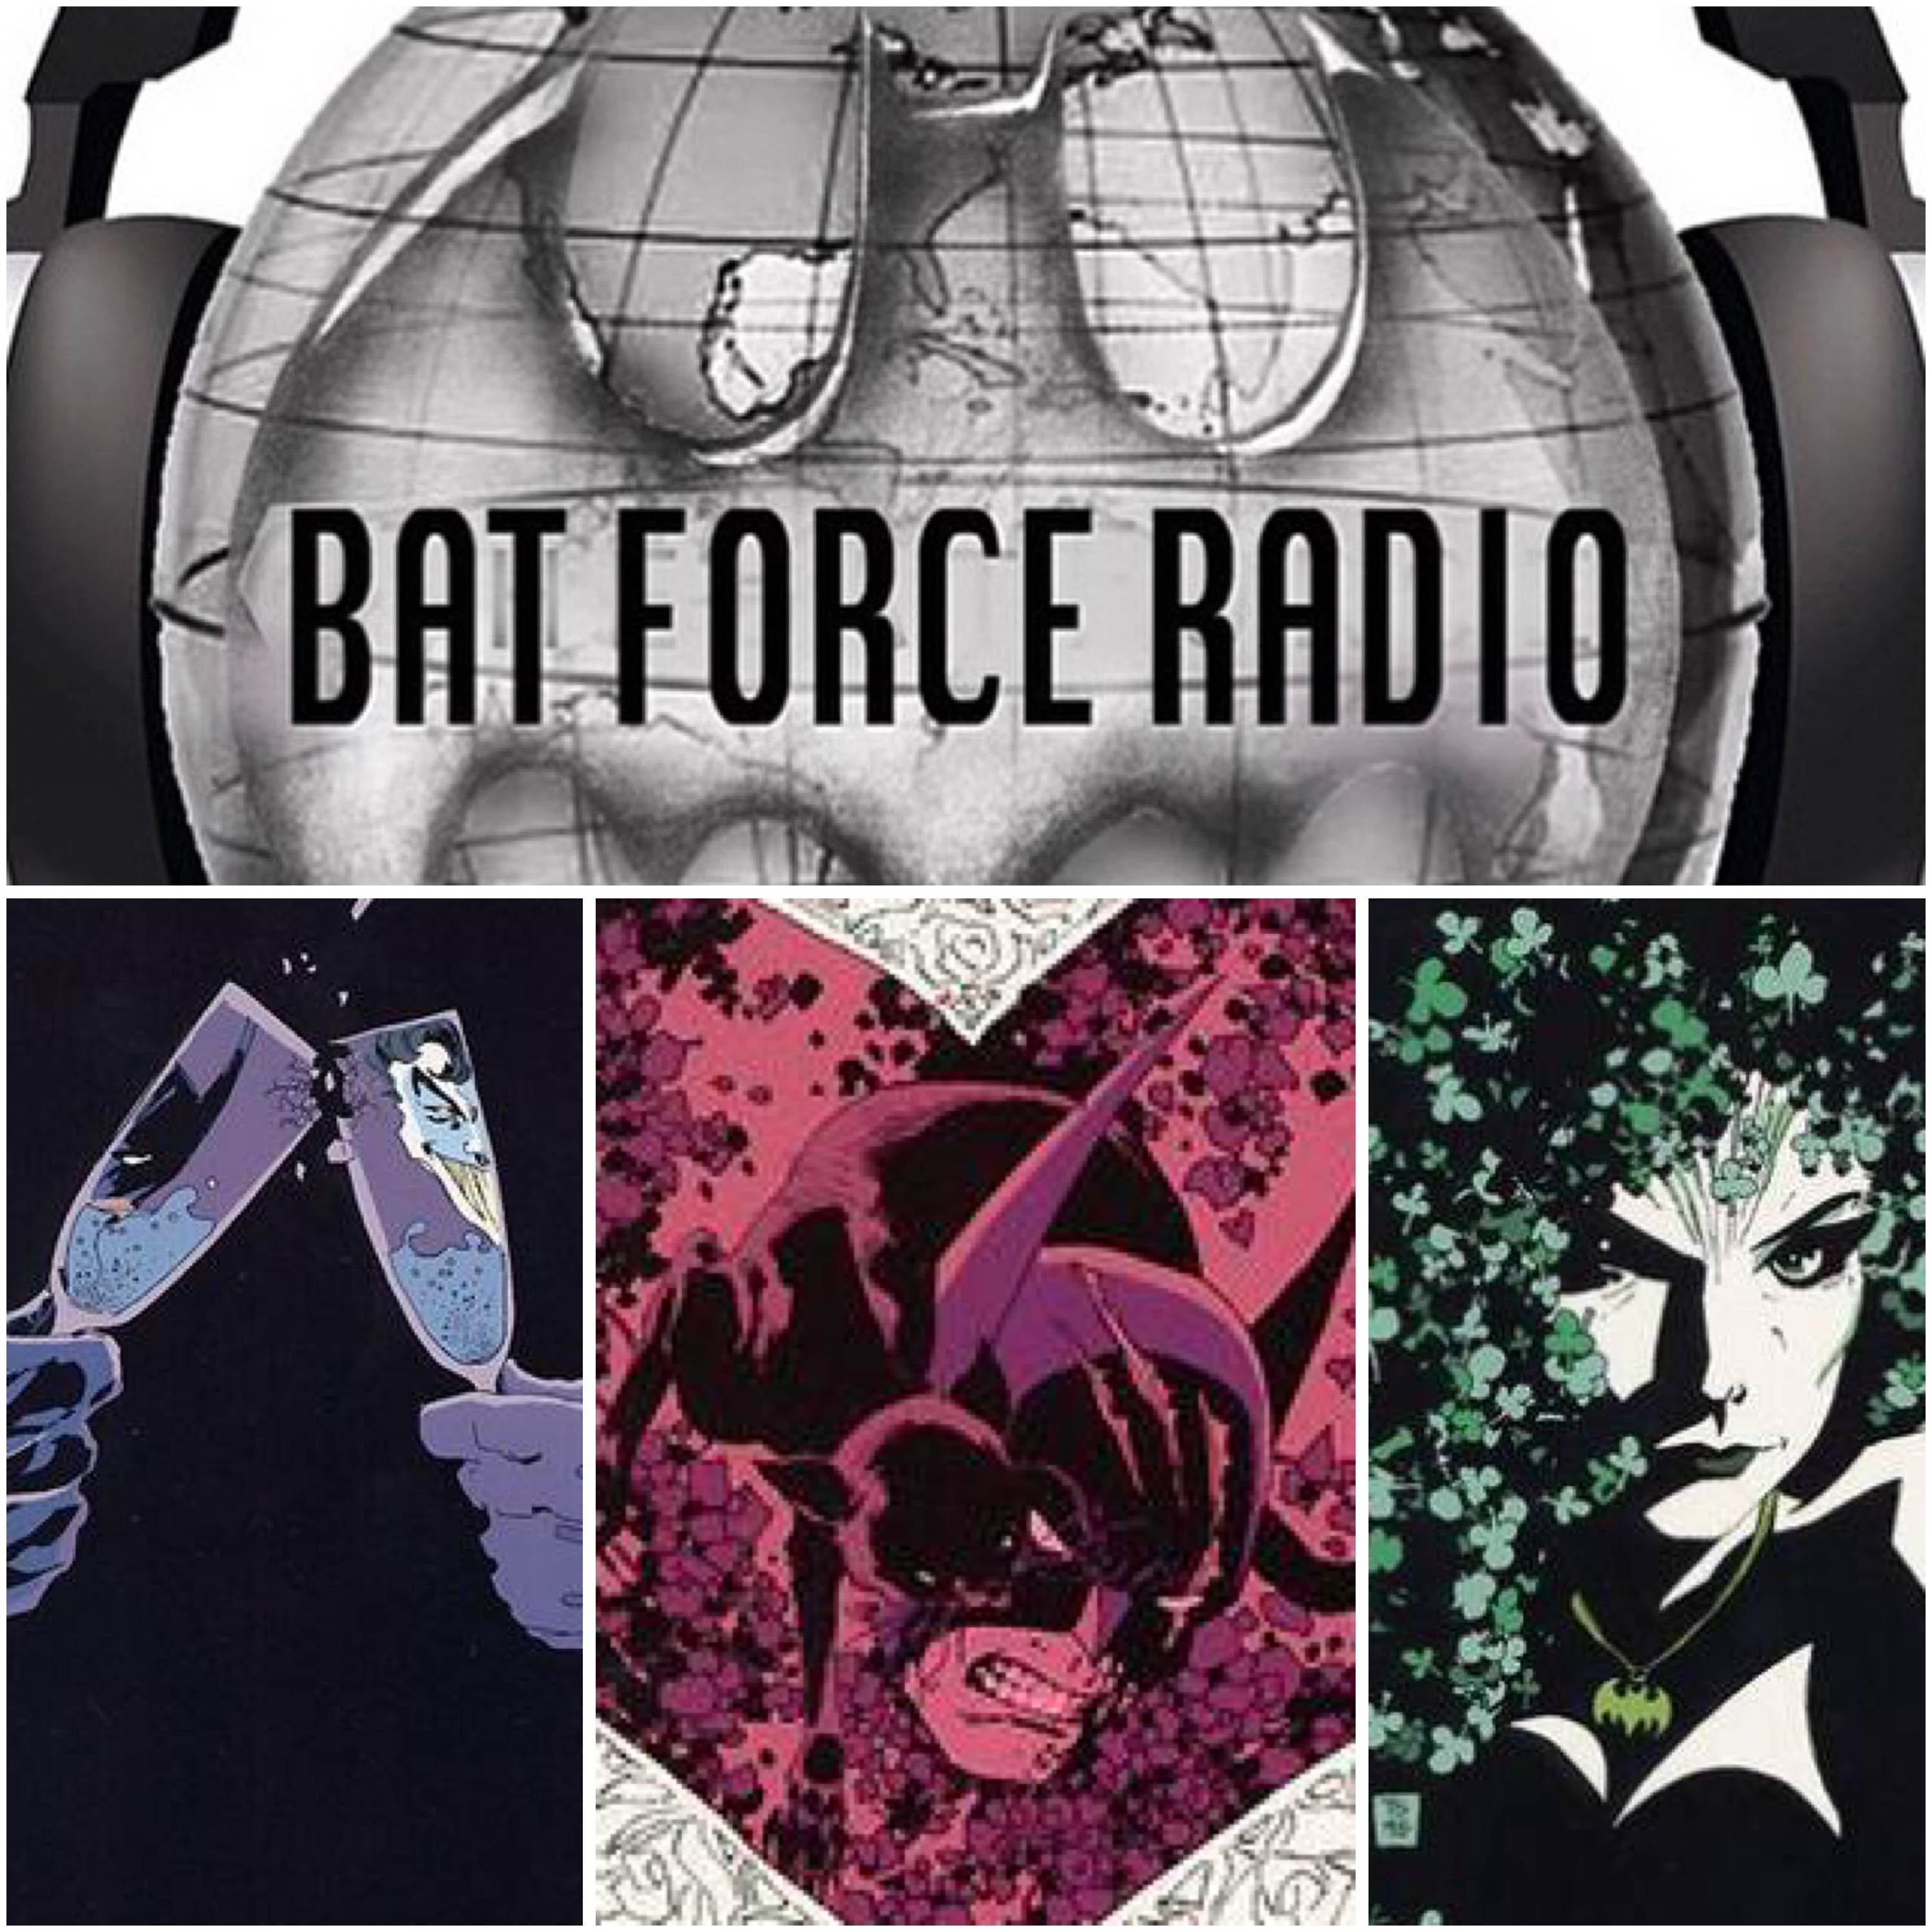 BatForceRadioEp009: The Long Halloween #4-6